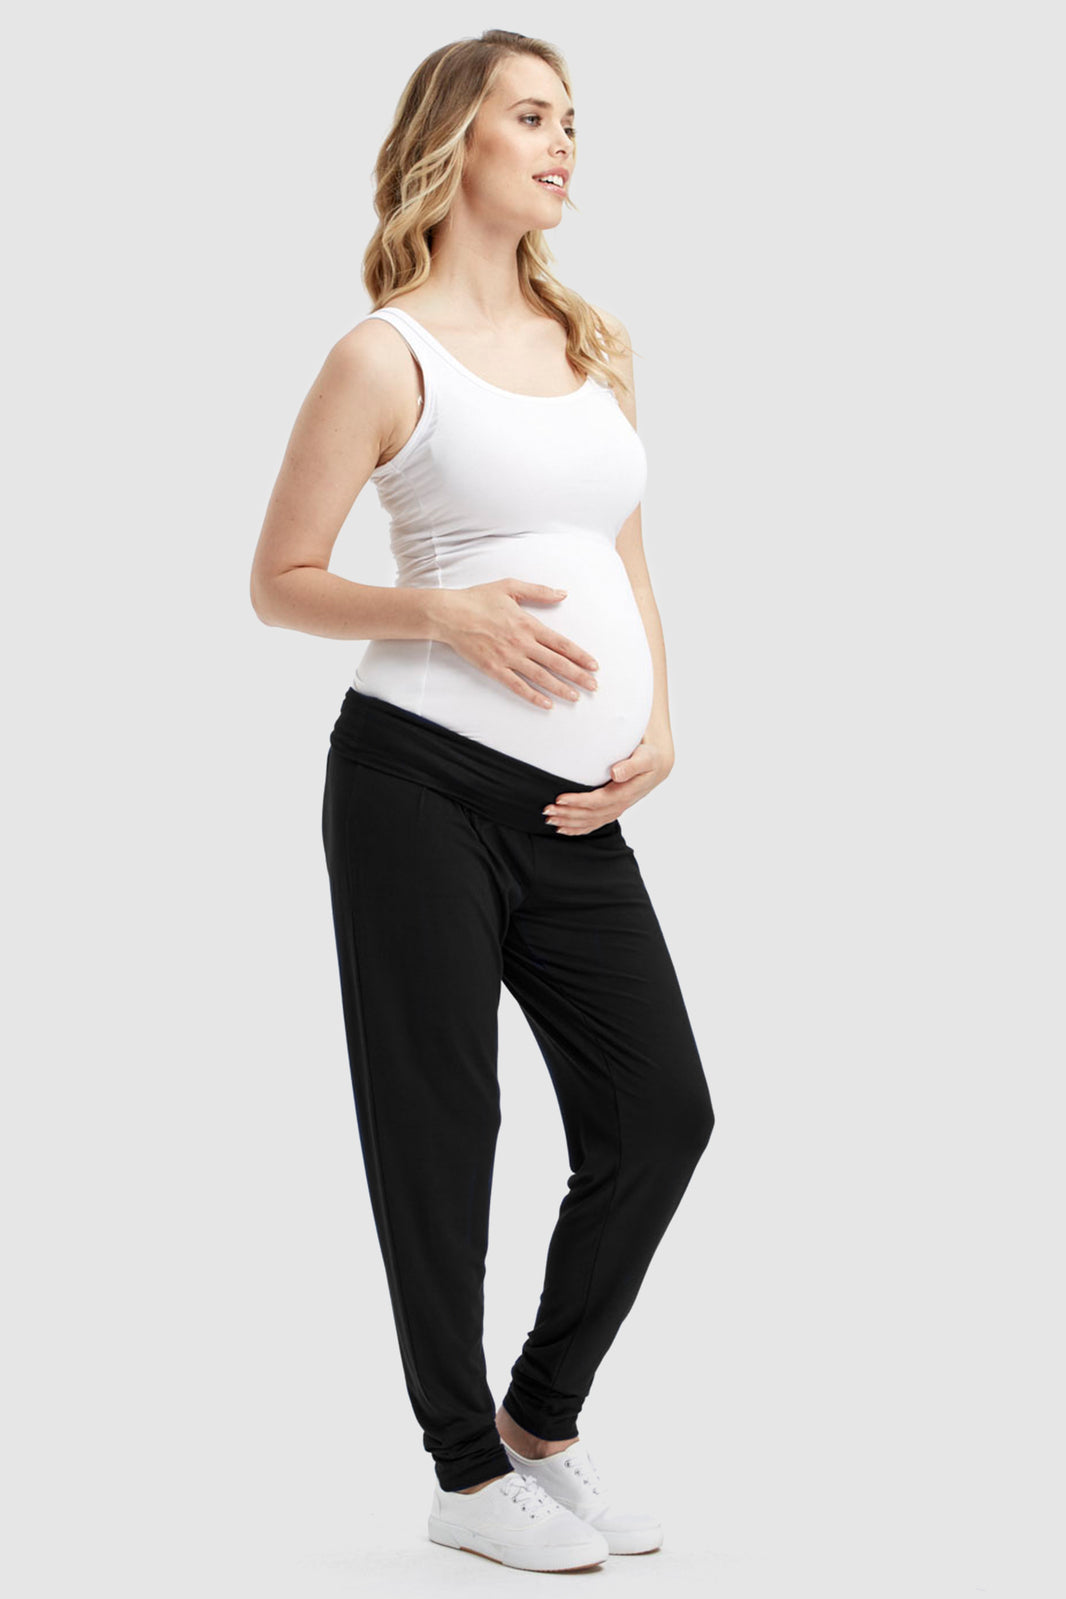 Organic Bamboo Maternity Slouch Pants Pants from Bamboo Body maternity online store brisbane sydney perth australia